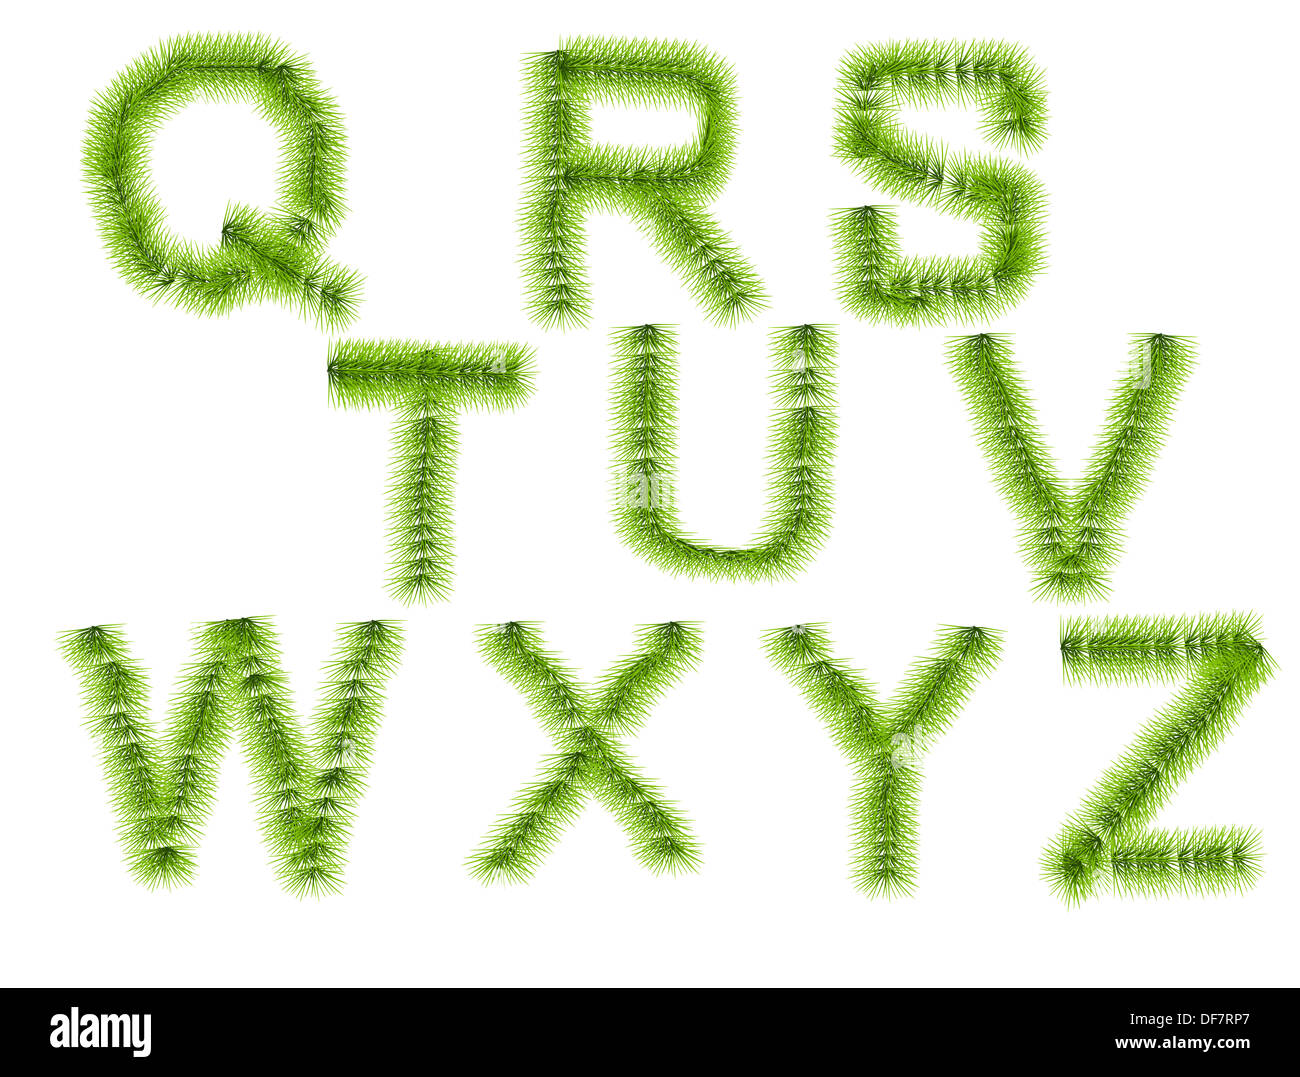 Grass Letters Q R S T U V W X Y Z Isolated O A White Stock Photo Alamy